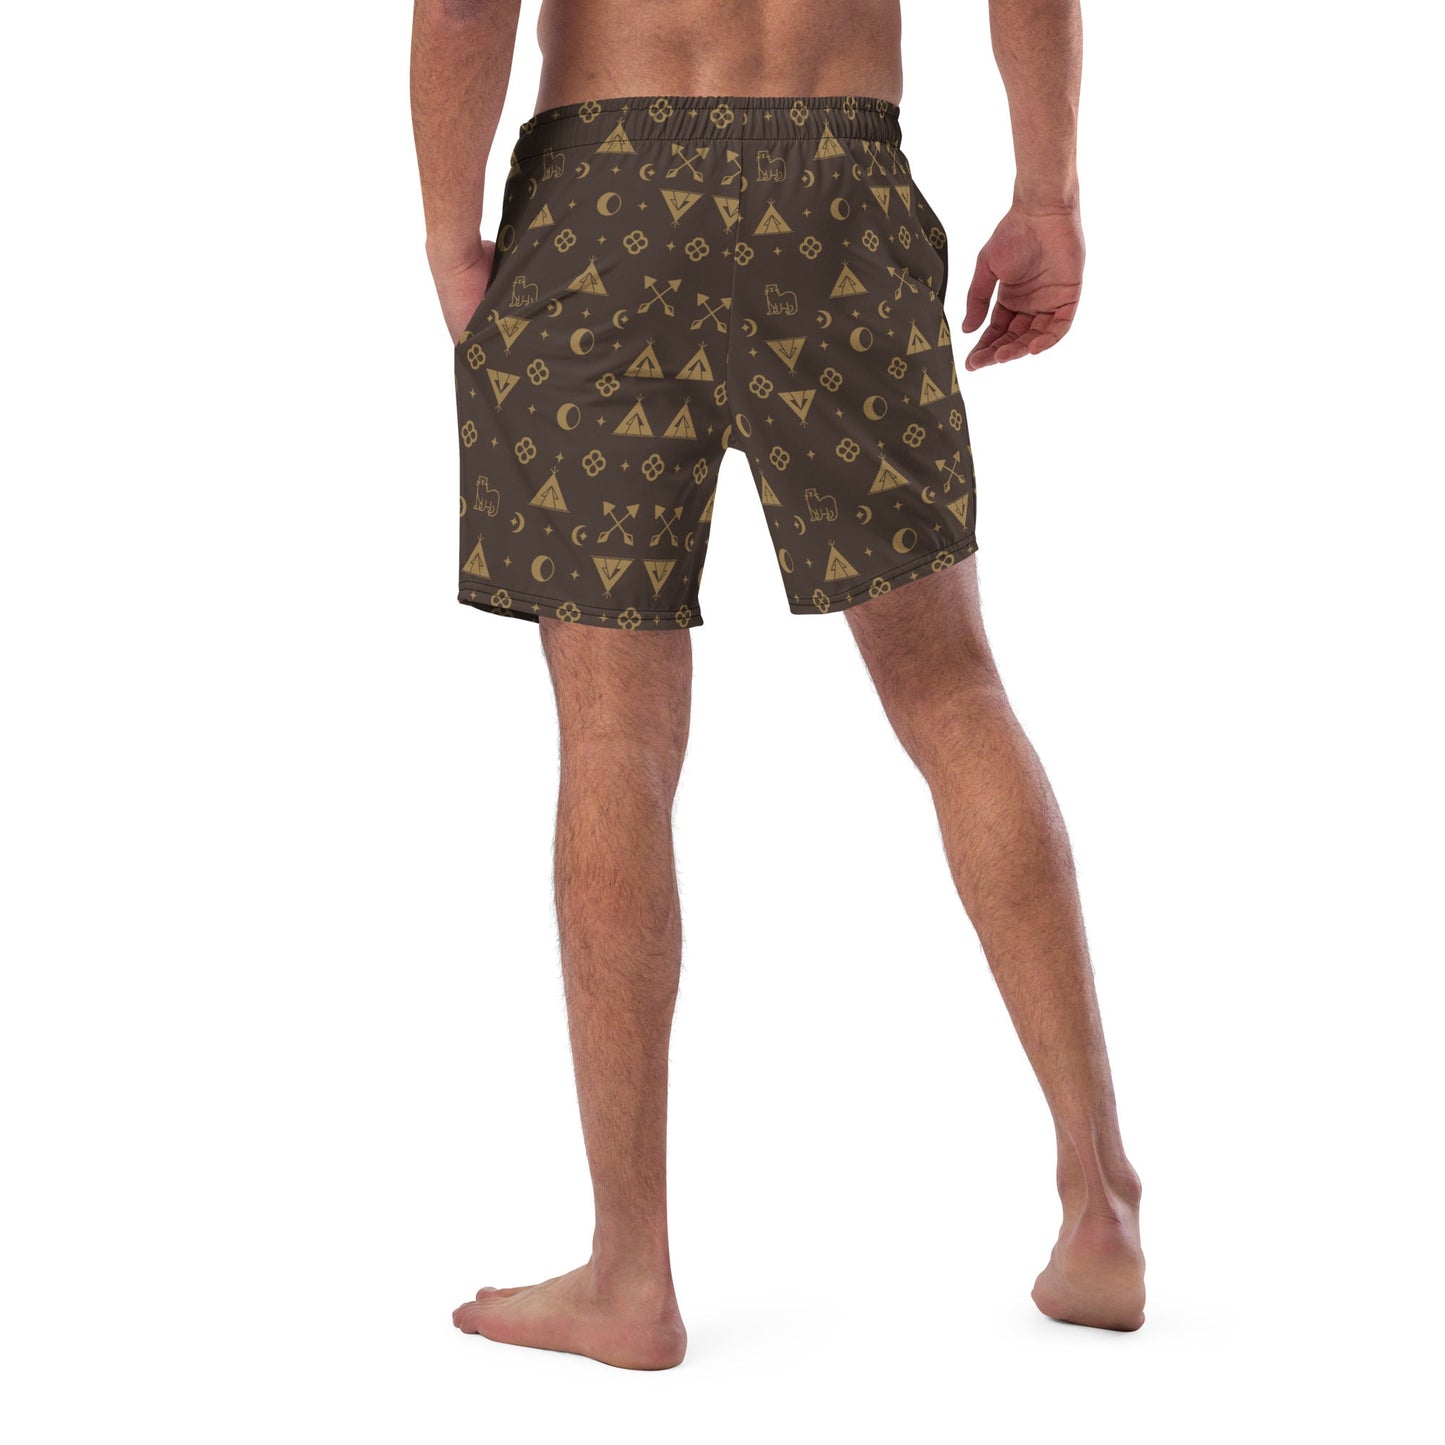 Men's swim trunks Boujee Native Recycled Material - Nikikw Designs